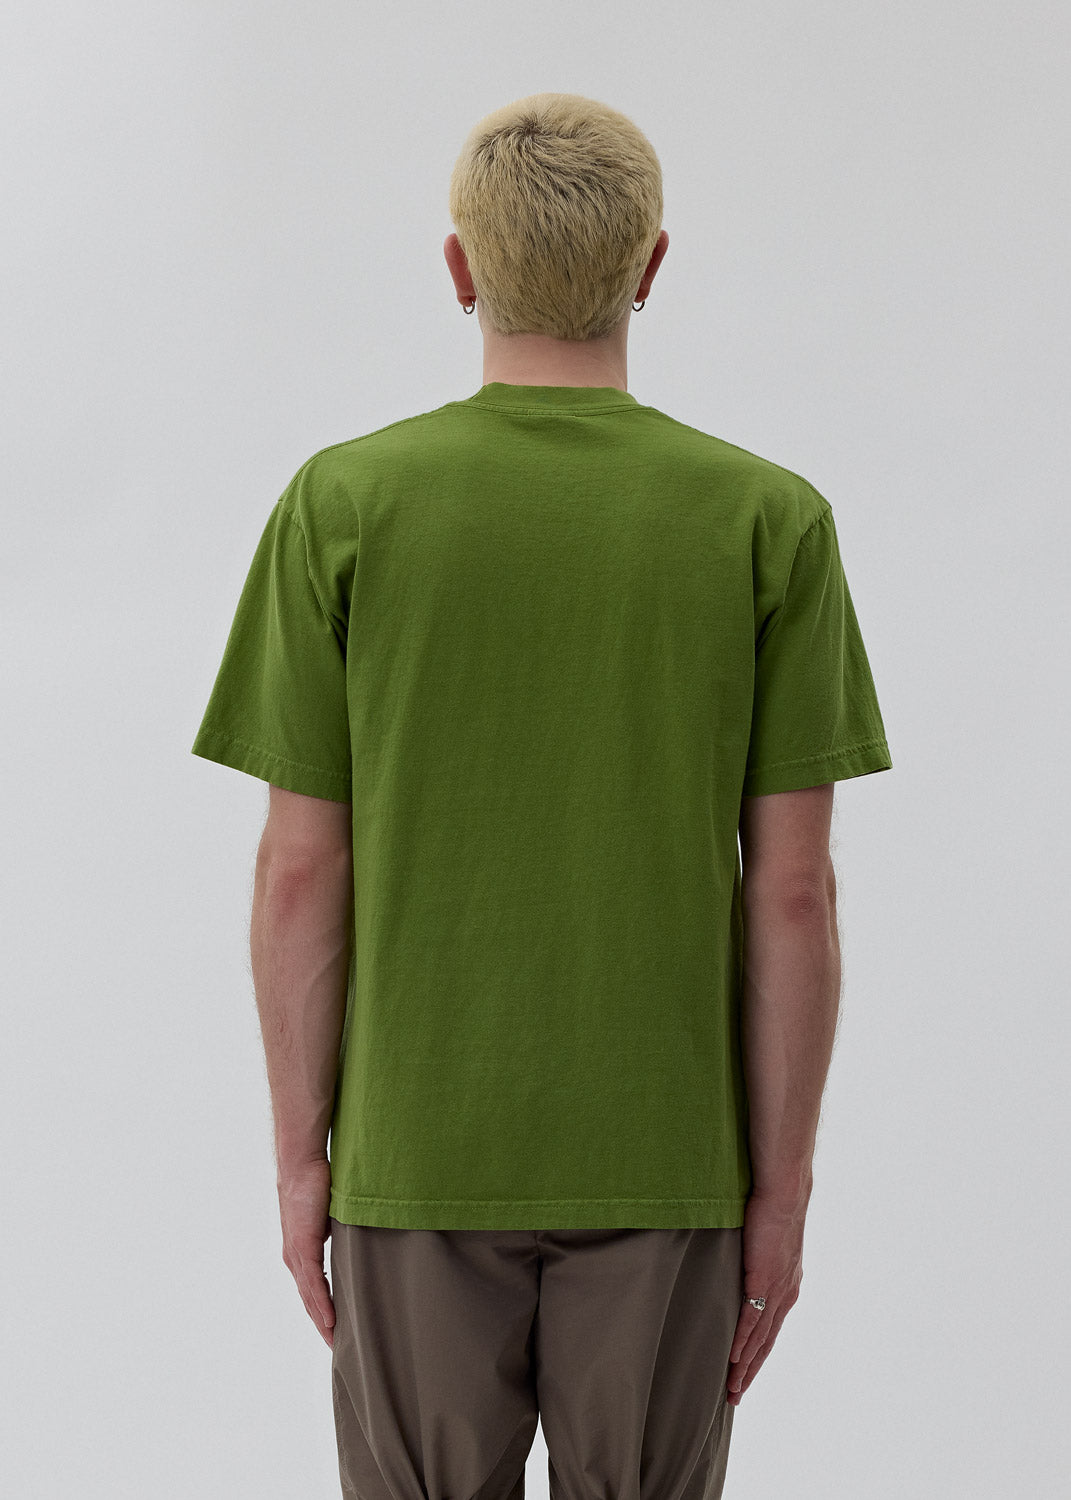 Stray Rats - Green Pixel Rat T-Shirt | 1032 SPACE